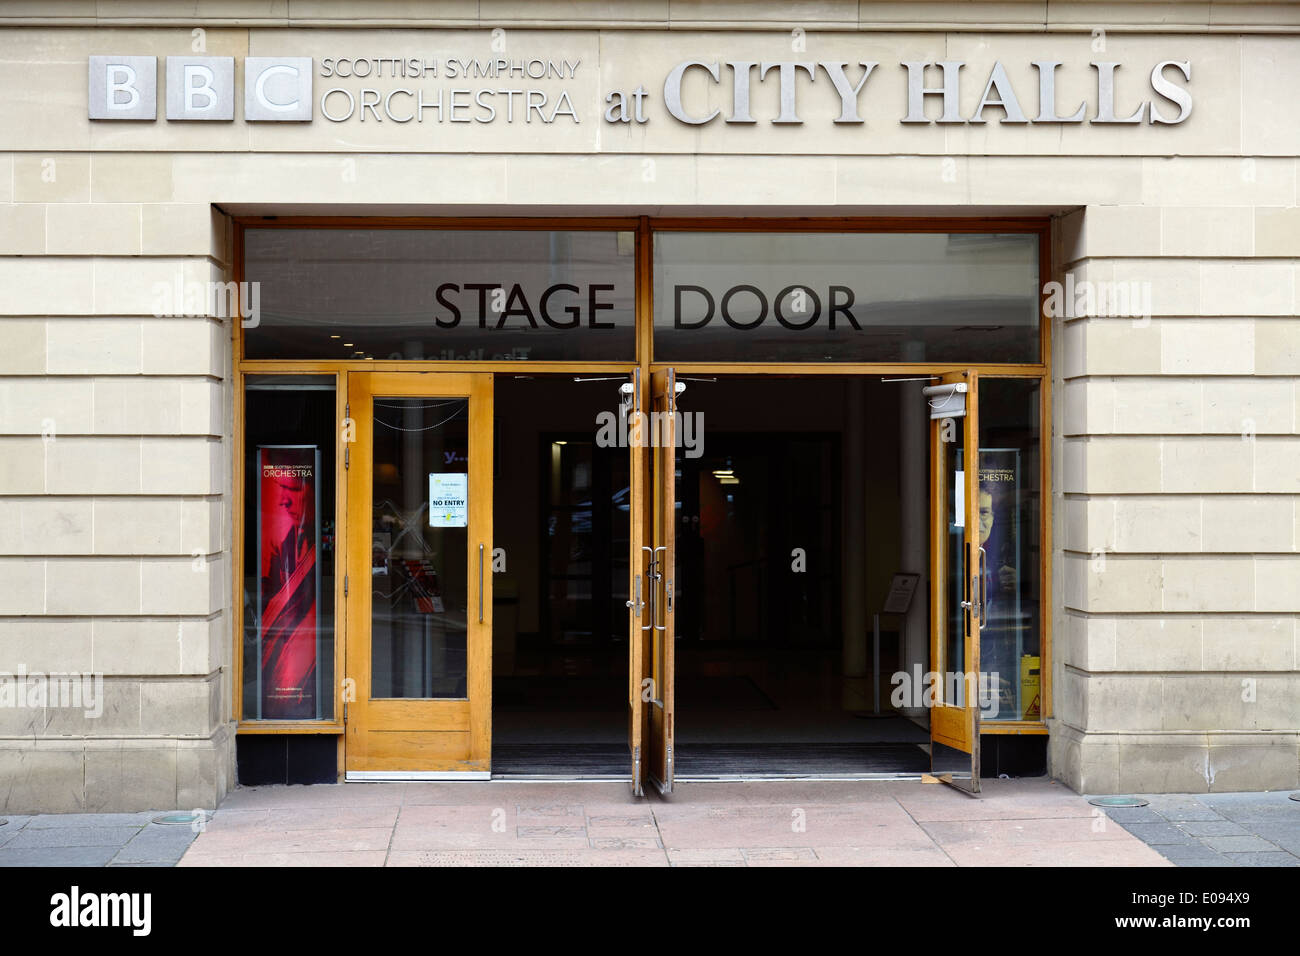 City Halls Glasgow, Stage Door, Albion Street, Scozia, Regno Unito Foto Stock